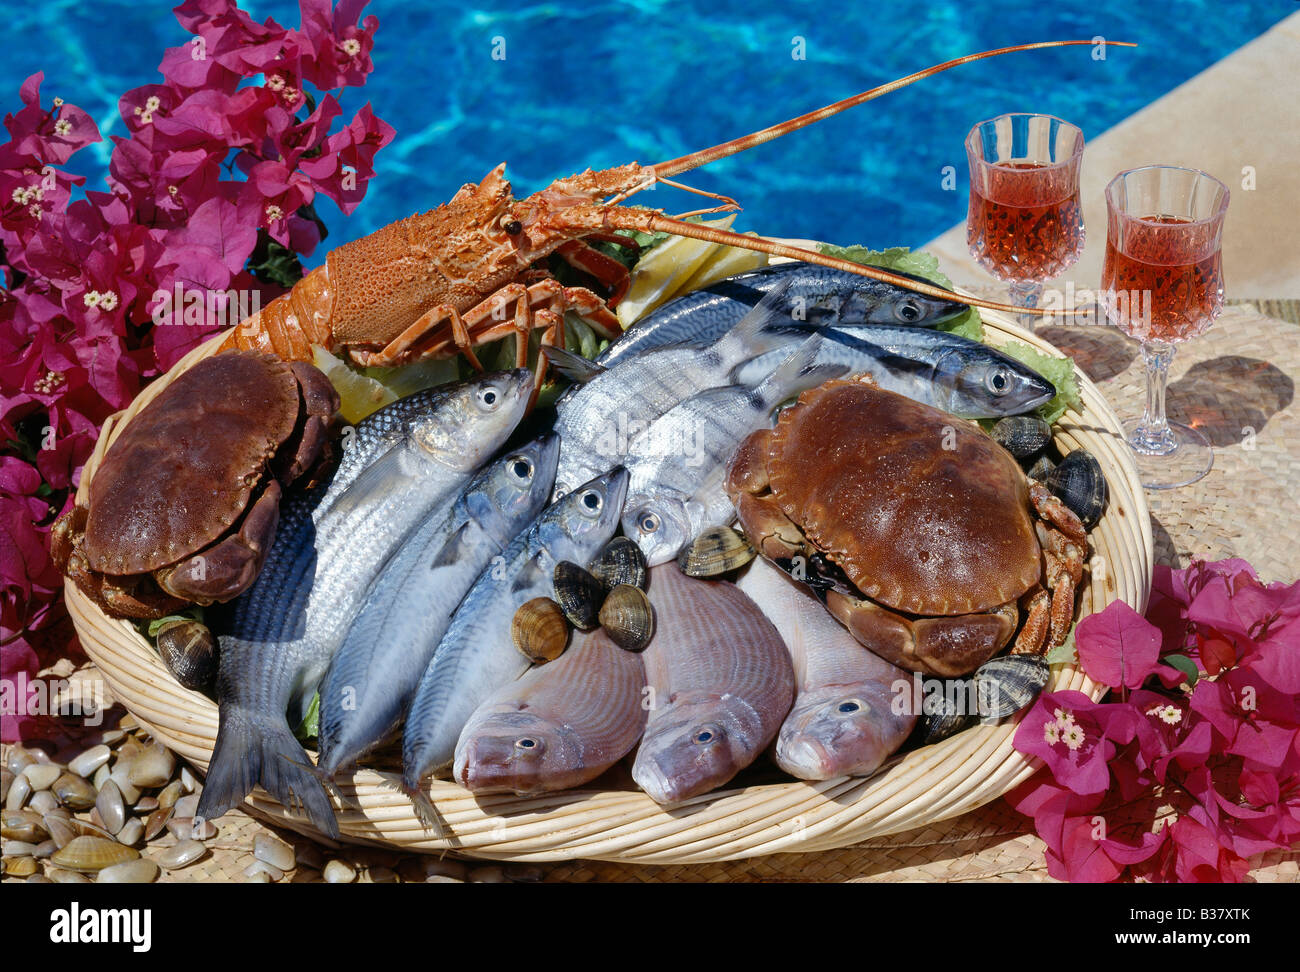 Seafood, Fish, shellfish, seafood  & crayfish by a swimming pool Stock Photo